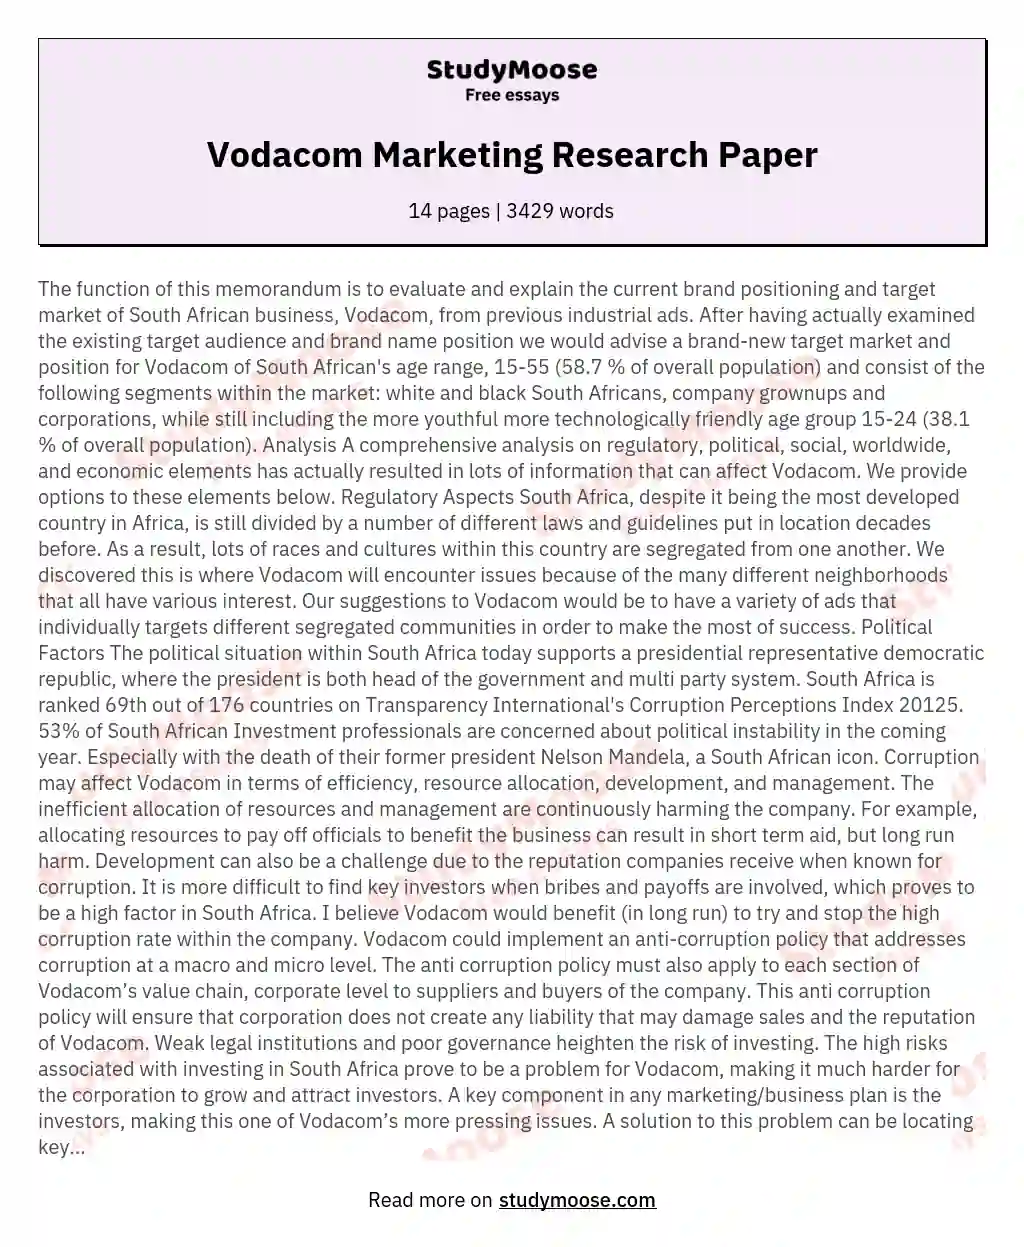 Vodacom Marketing Research Paper essay